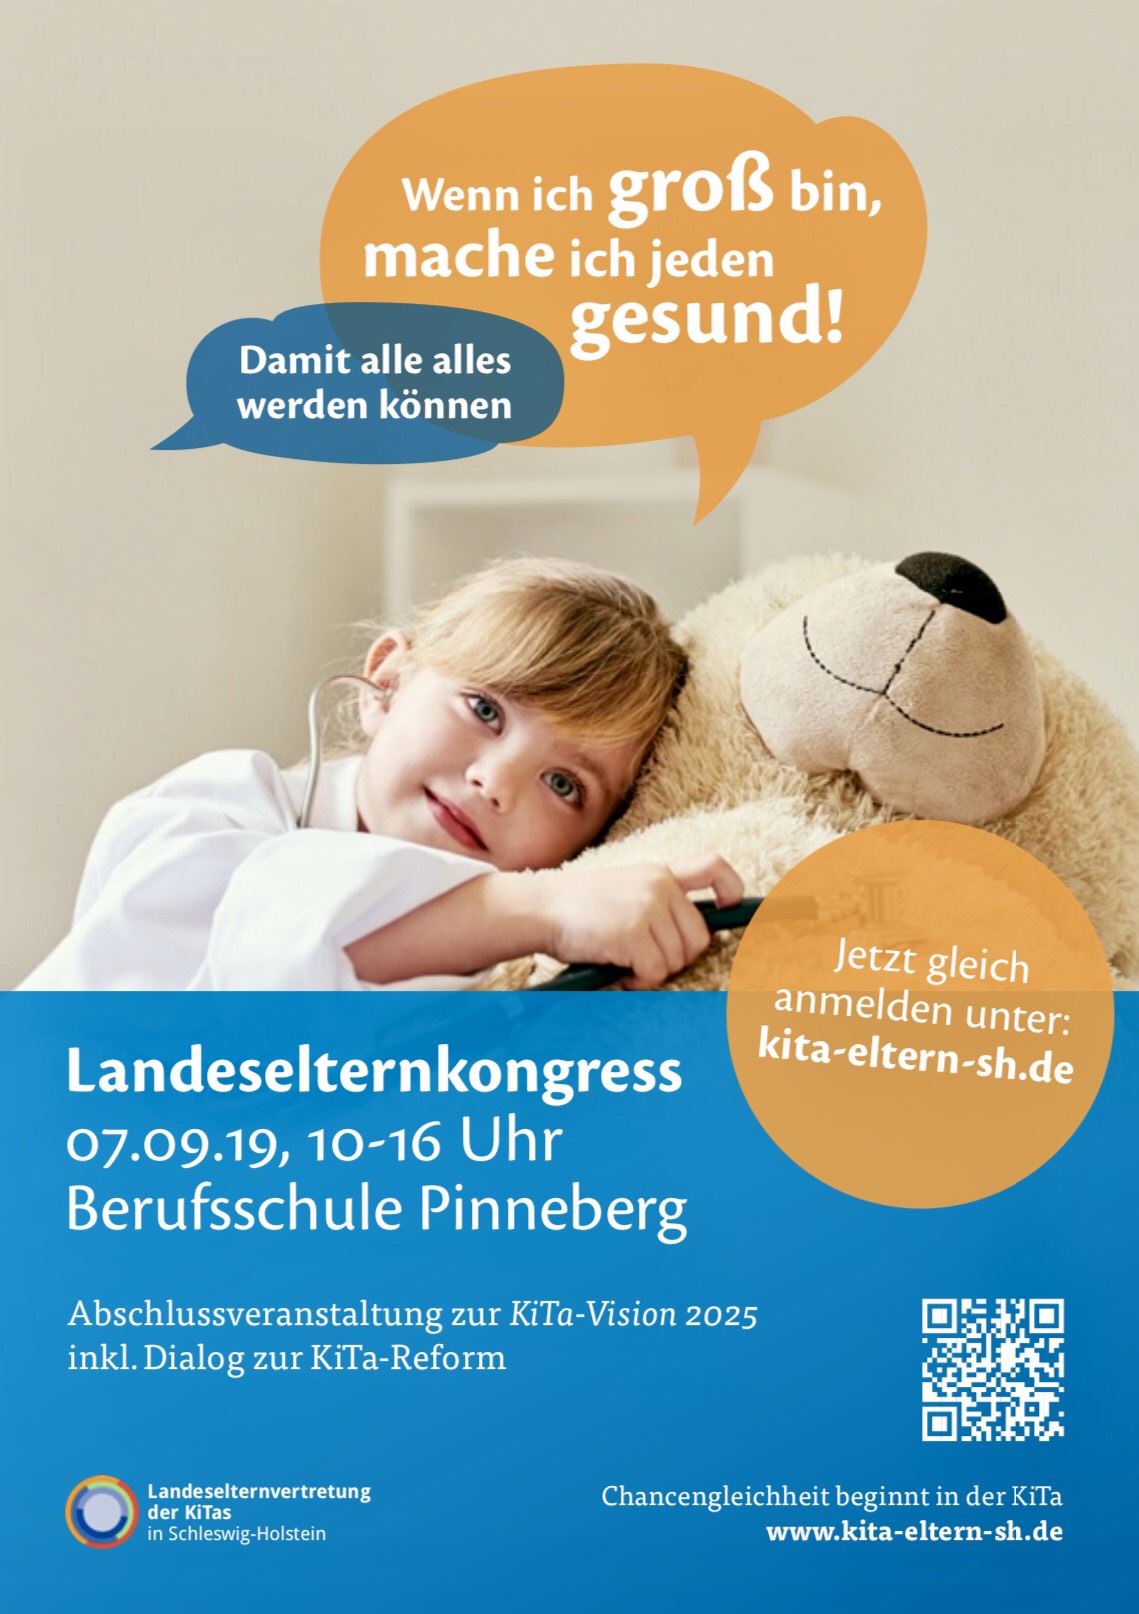 Freie-Demokraten-FDP-Stadtverband-Wedel-Soziales-Kita-Landeselternkongress-Plakat